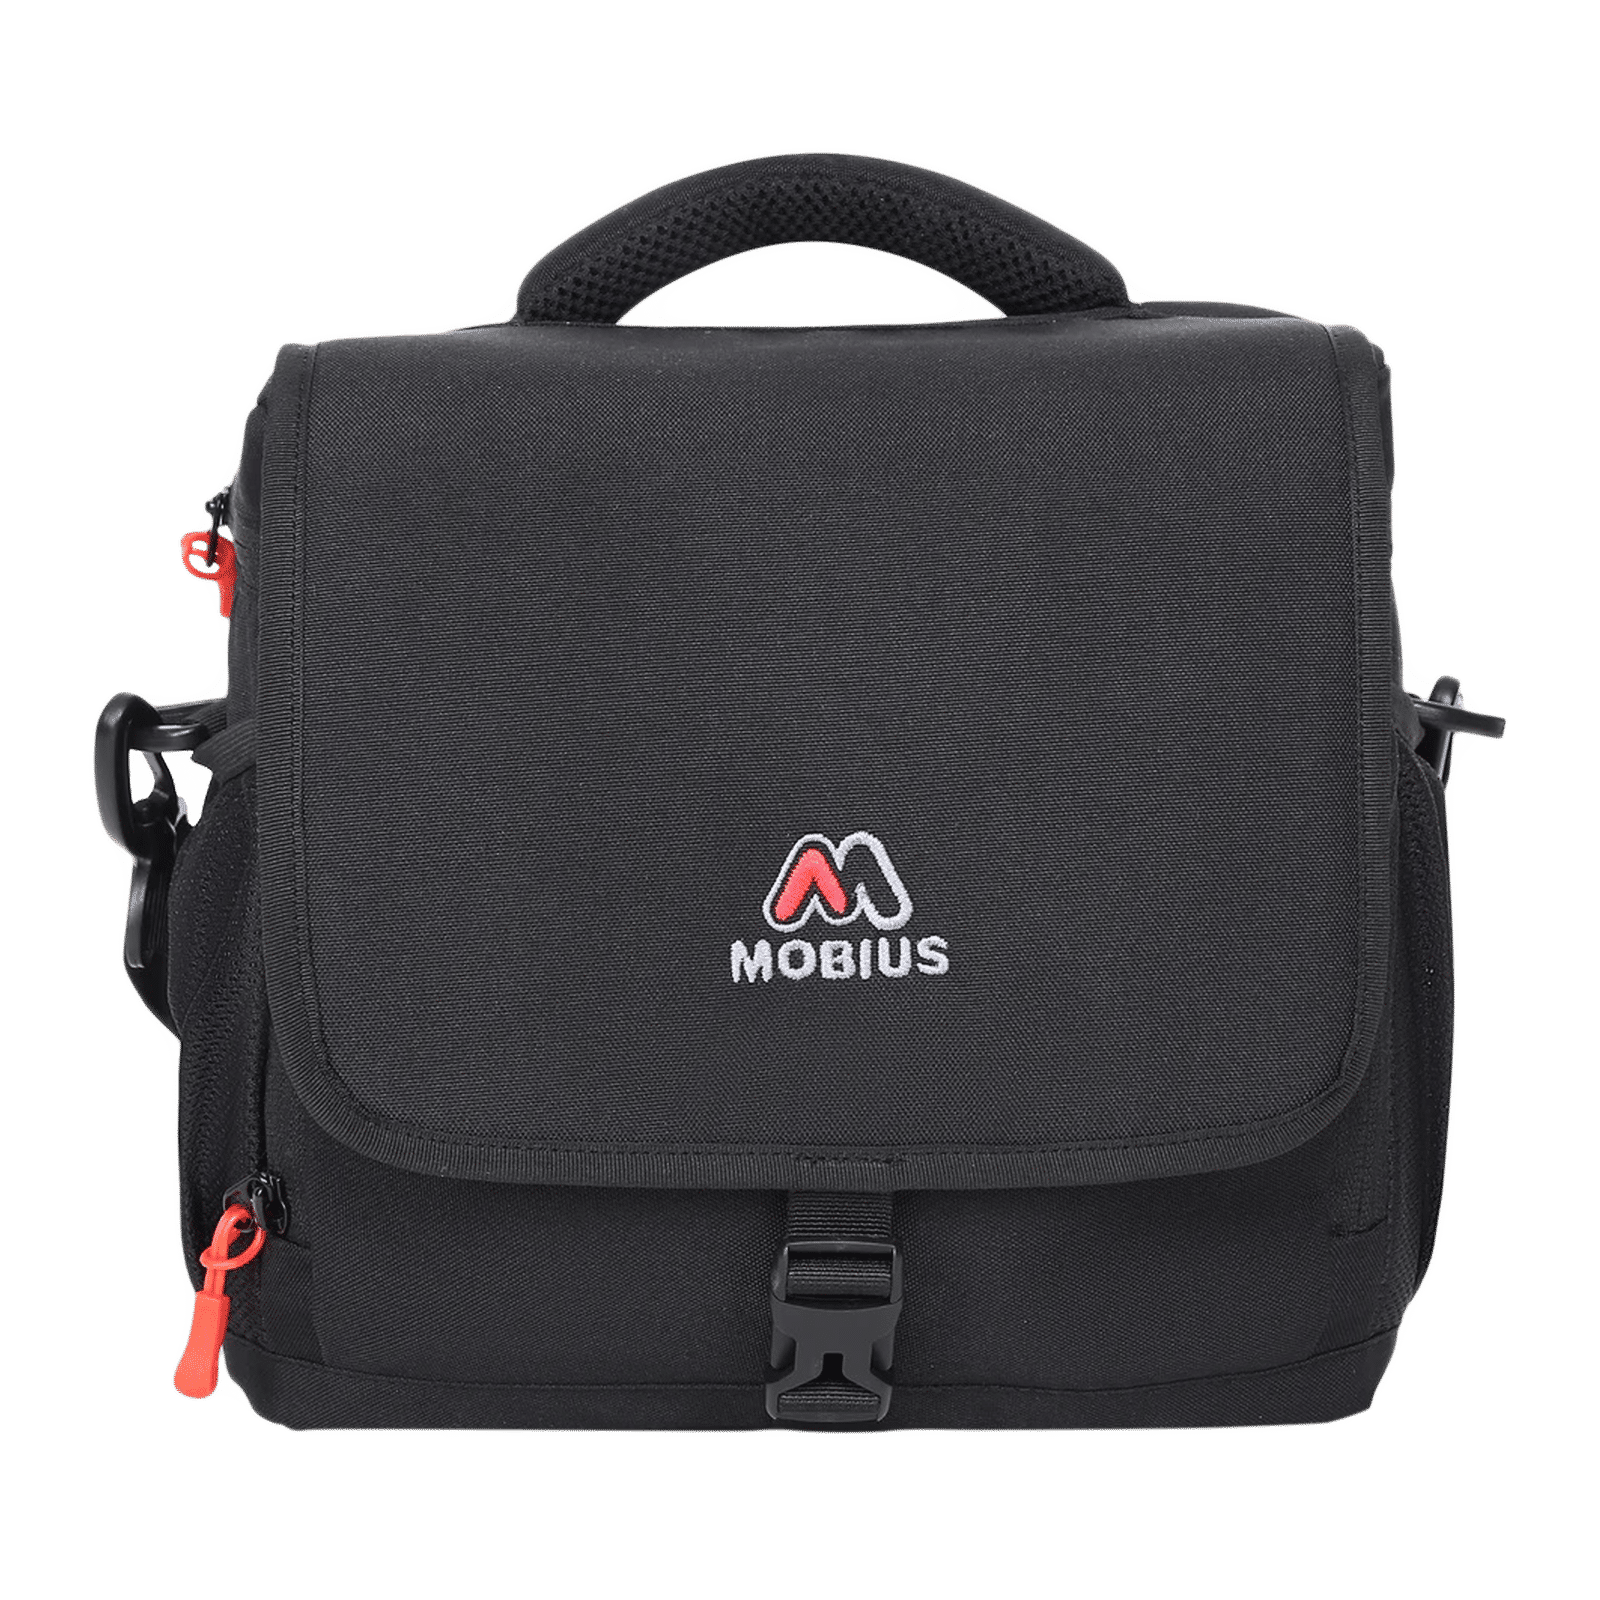 Mobius Screenshot DSLR Backpack - Camclinic